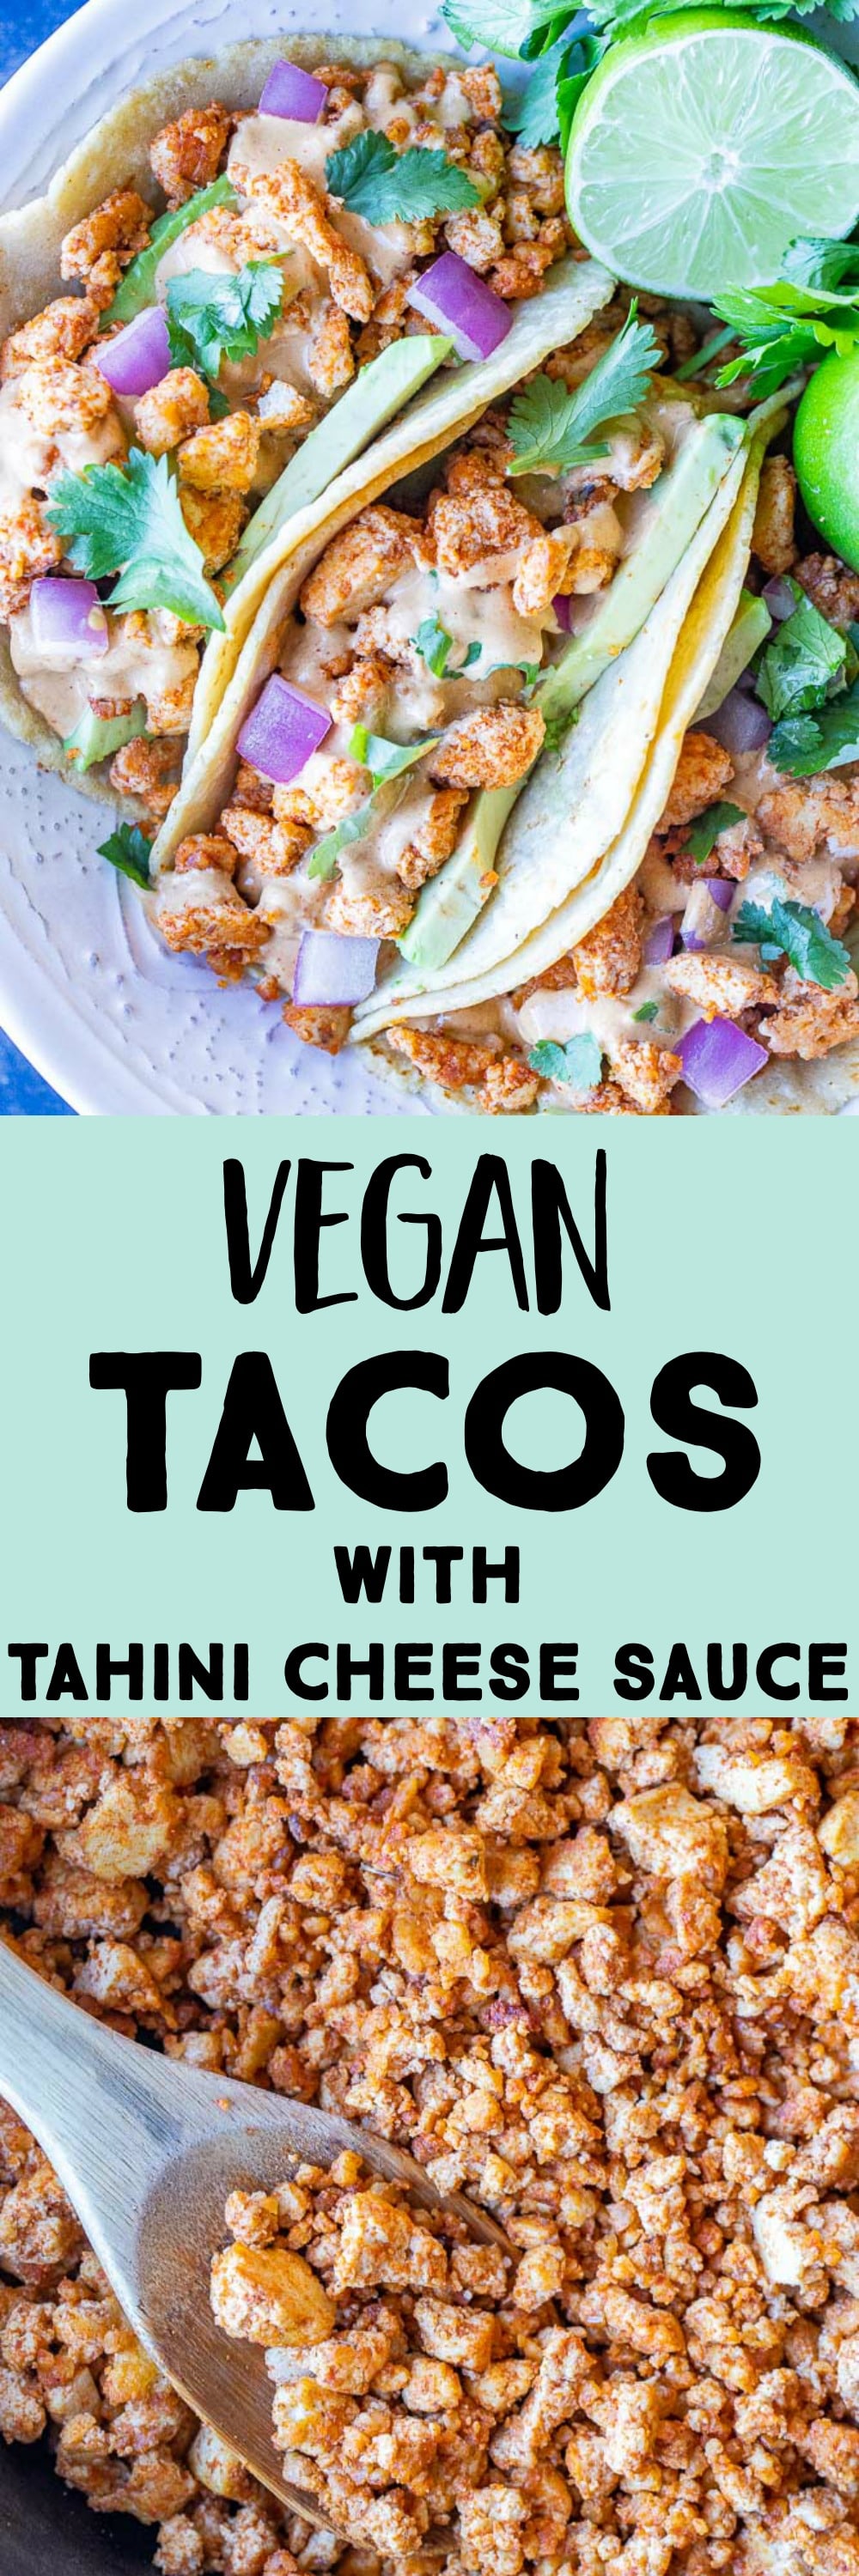 Vegan Tacos with Tahini Cheese Sauce - She Likes Food